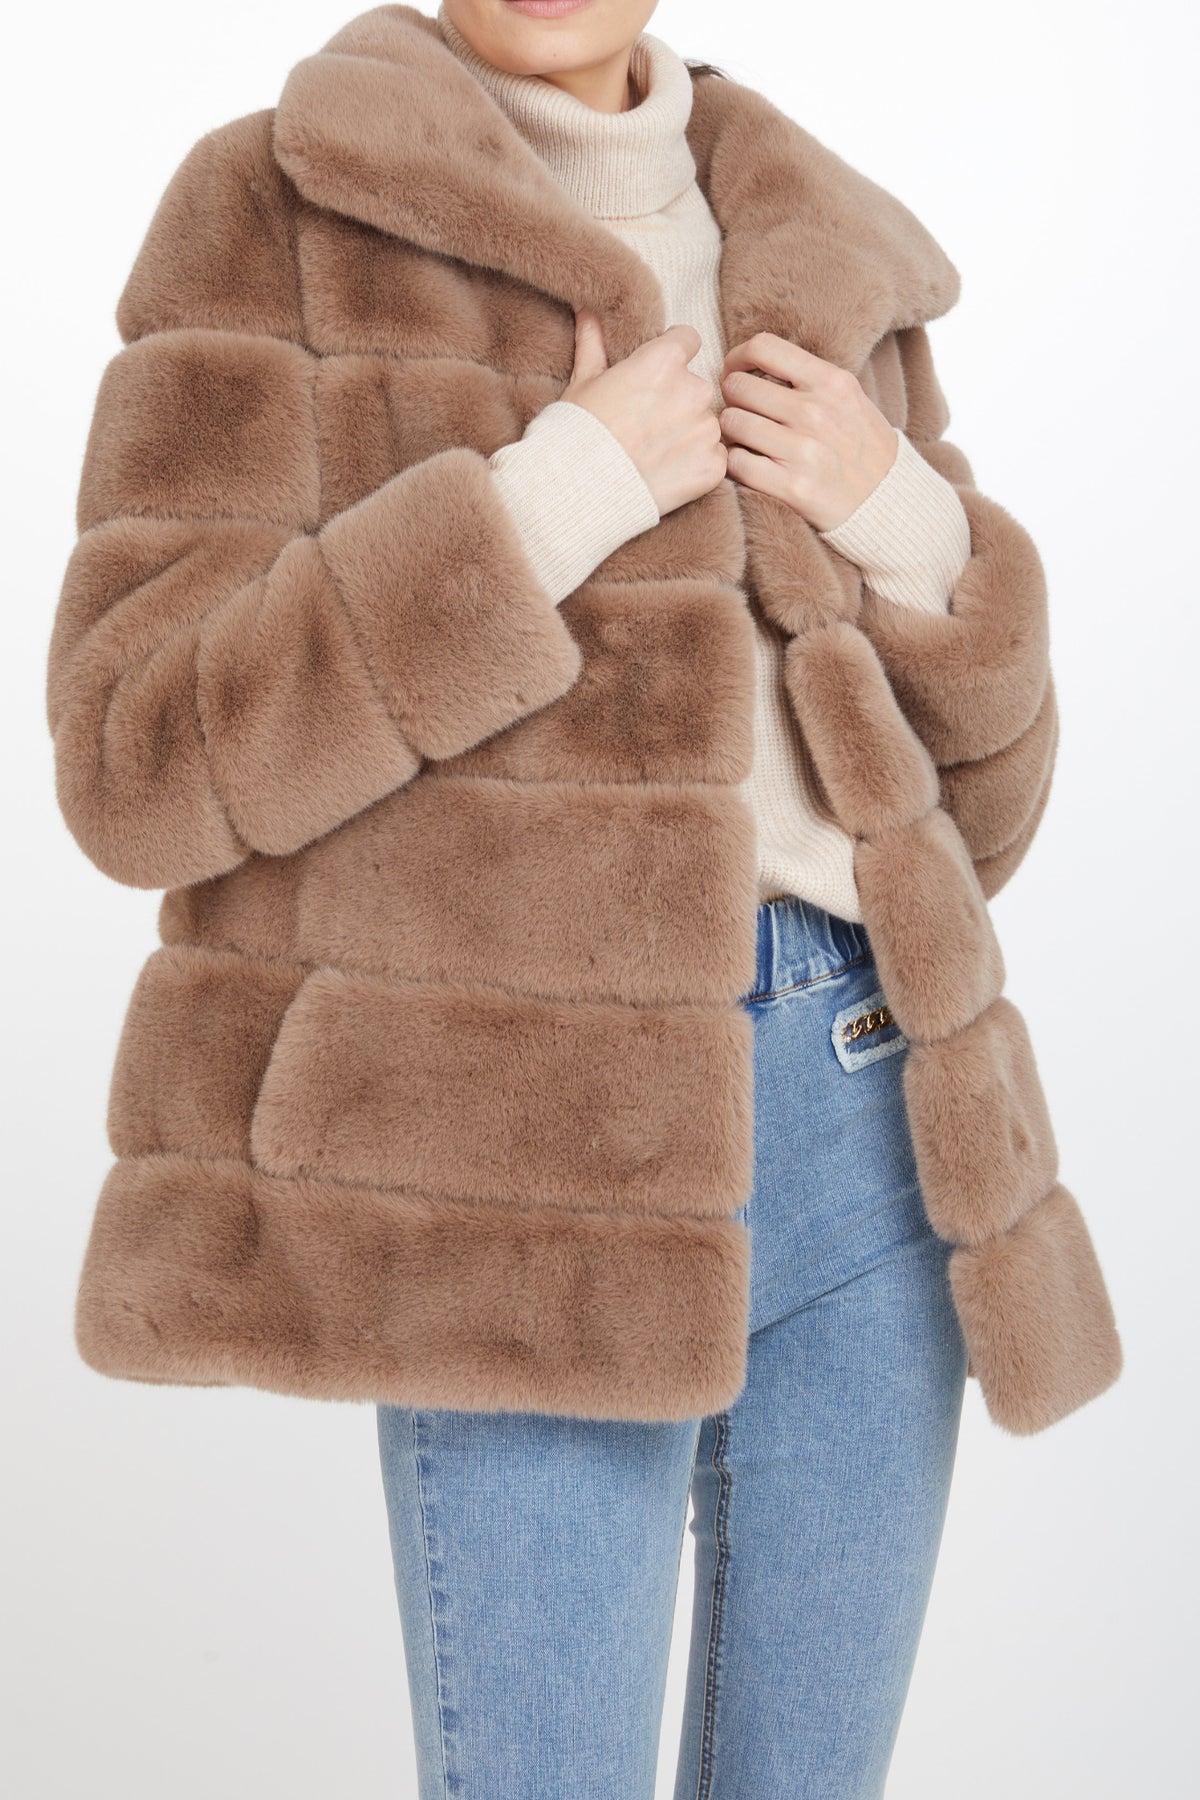 Women's Vegan Fur Coats & Jackets. Plush & Comfy